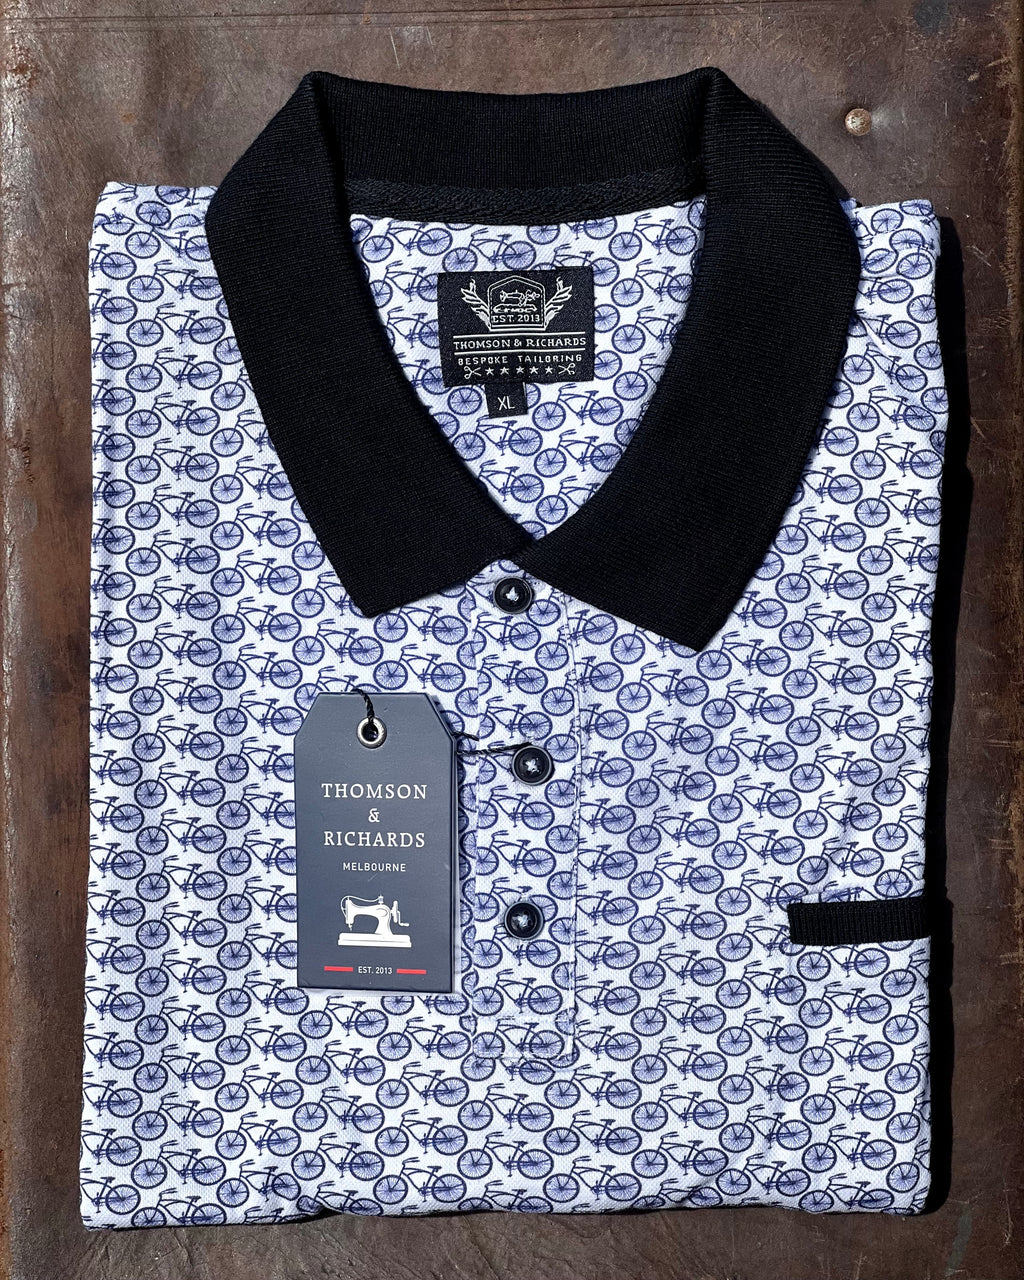 Short-sleeve cotton mix men's polo shirt by Thomson & Richards